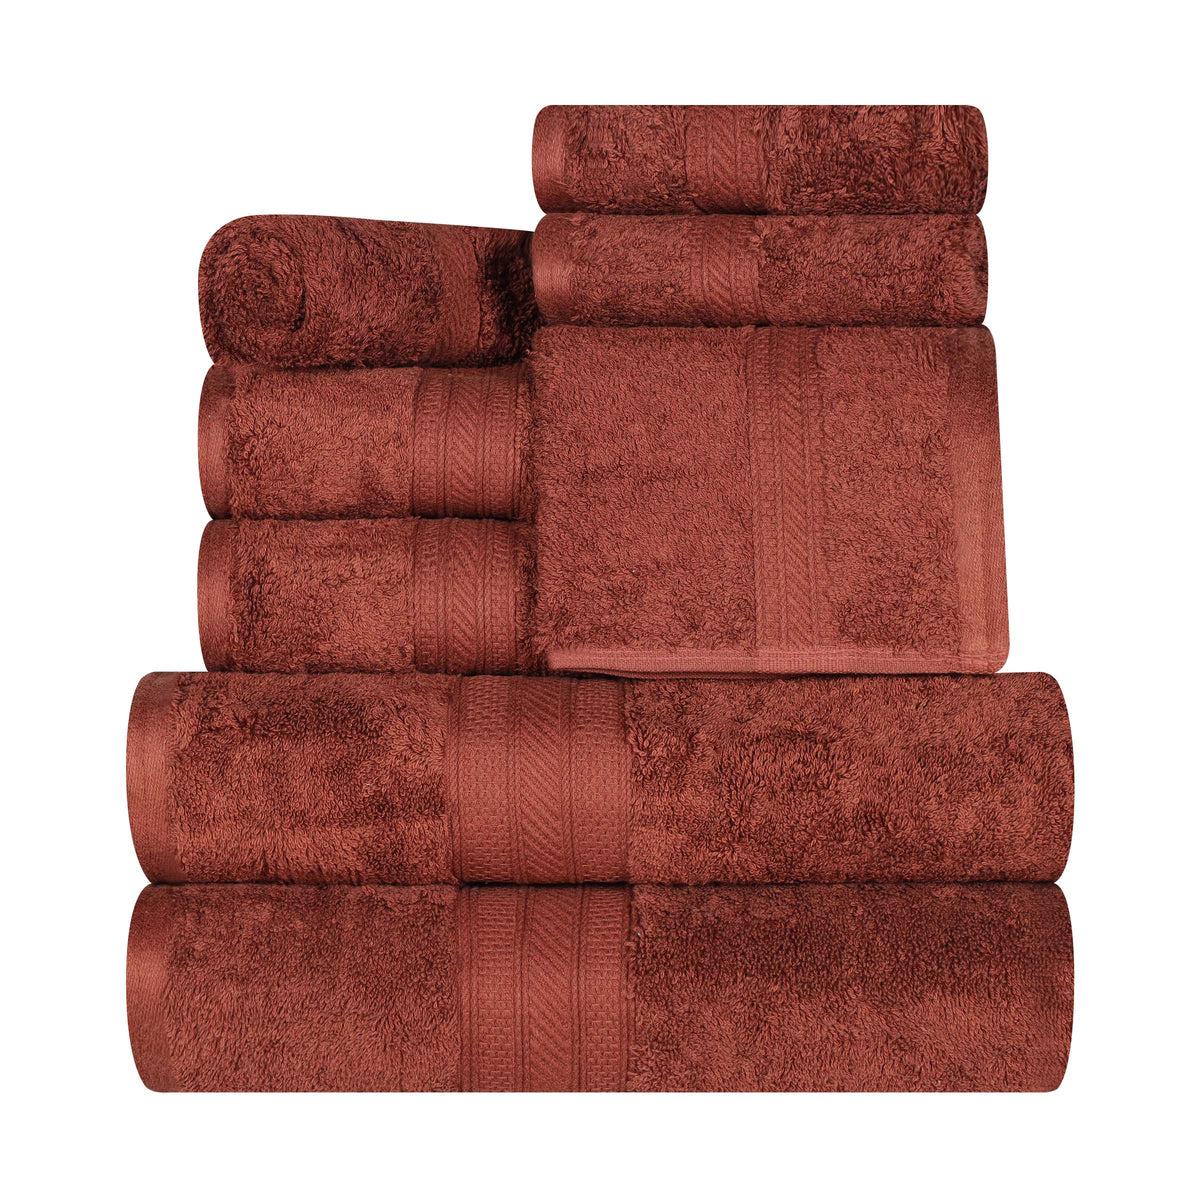 Cotton Heavyweight Absorbent Plush 8 Piece Towel Set - Chocolate